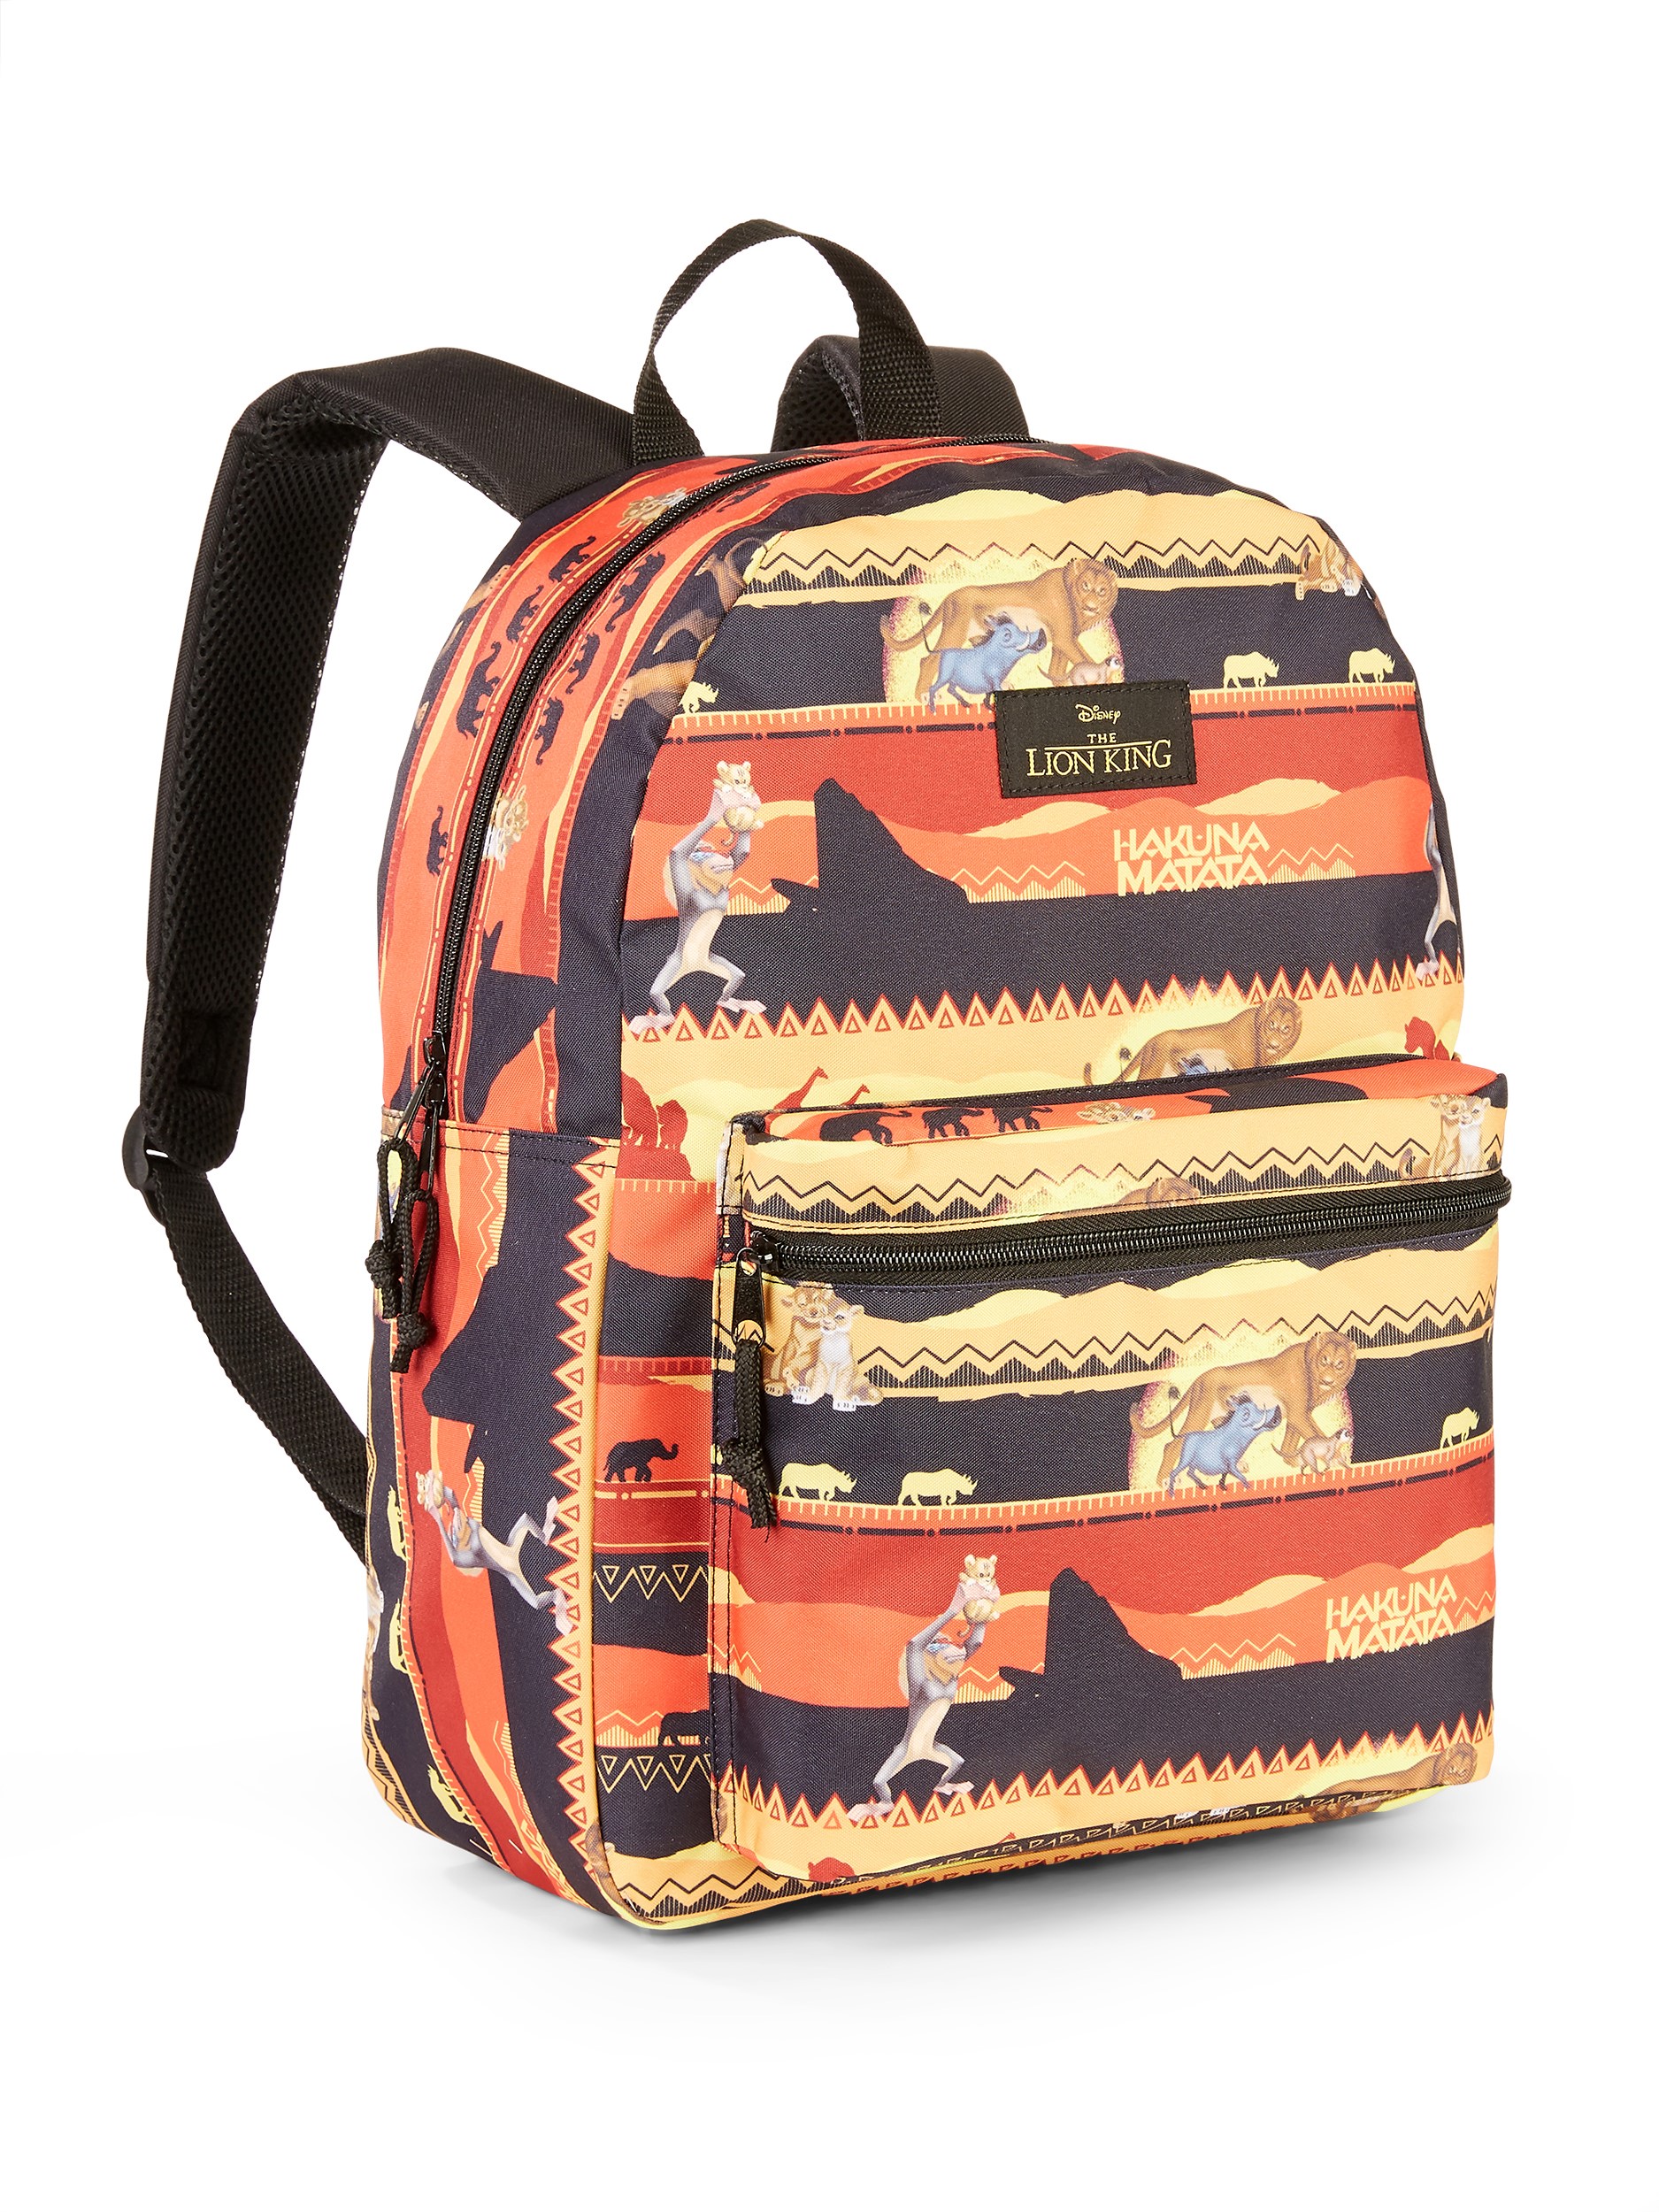 Lion King 16" Sunset Backpack (Walmart.com Exclusive) - image 4 of 4